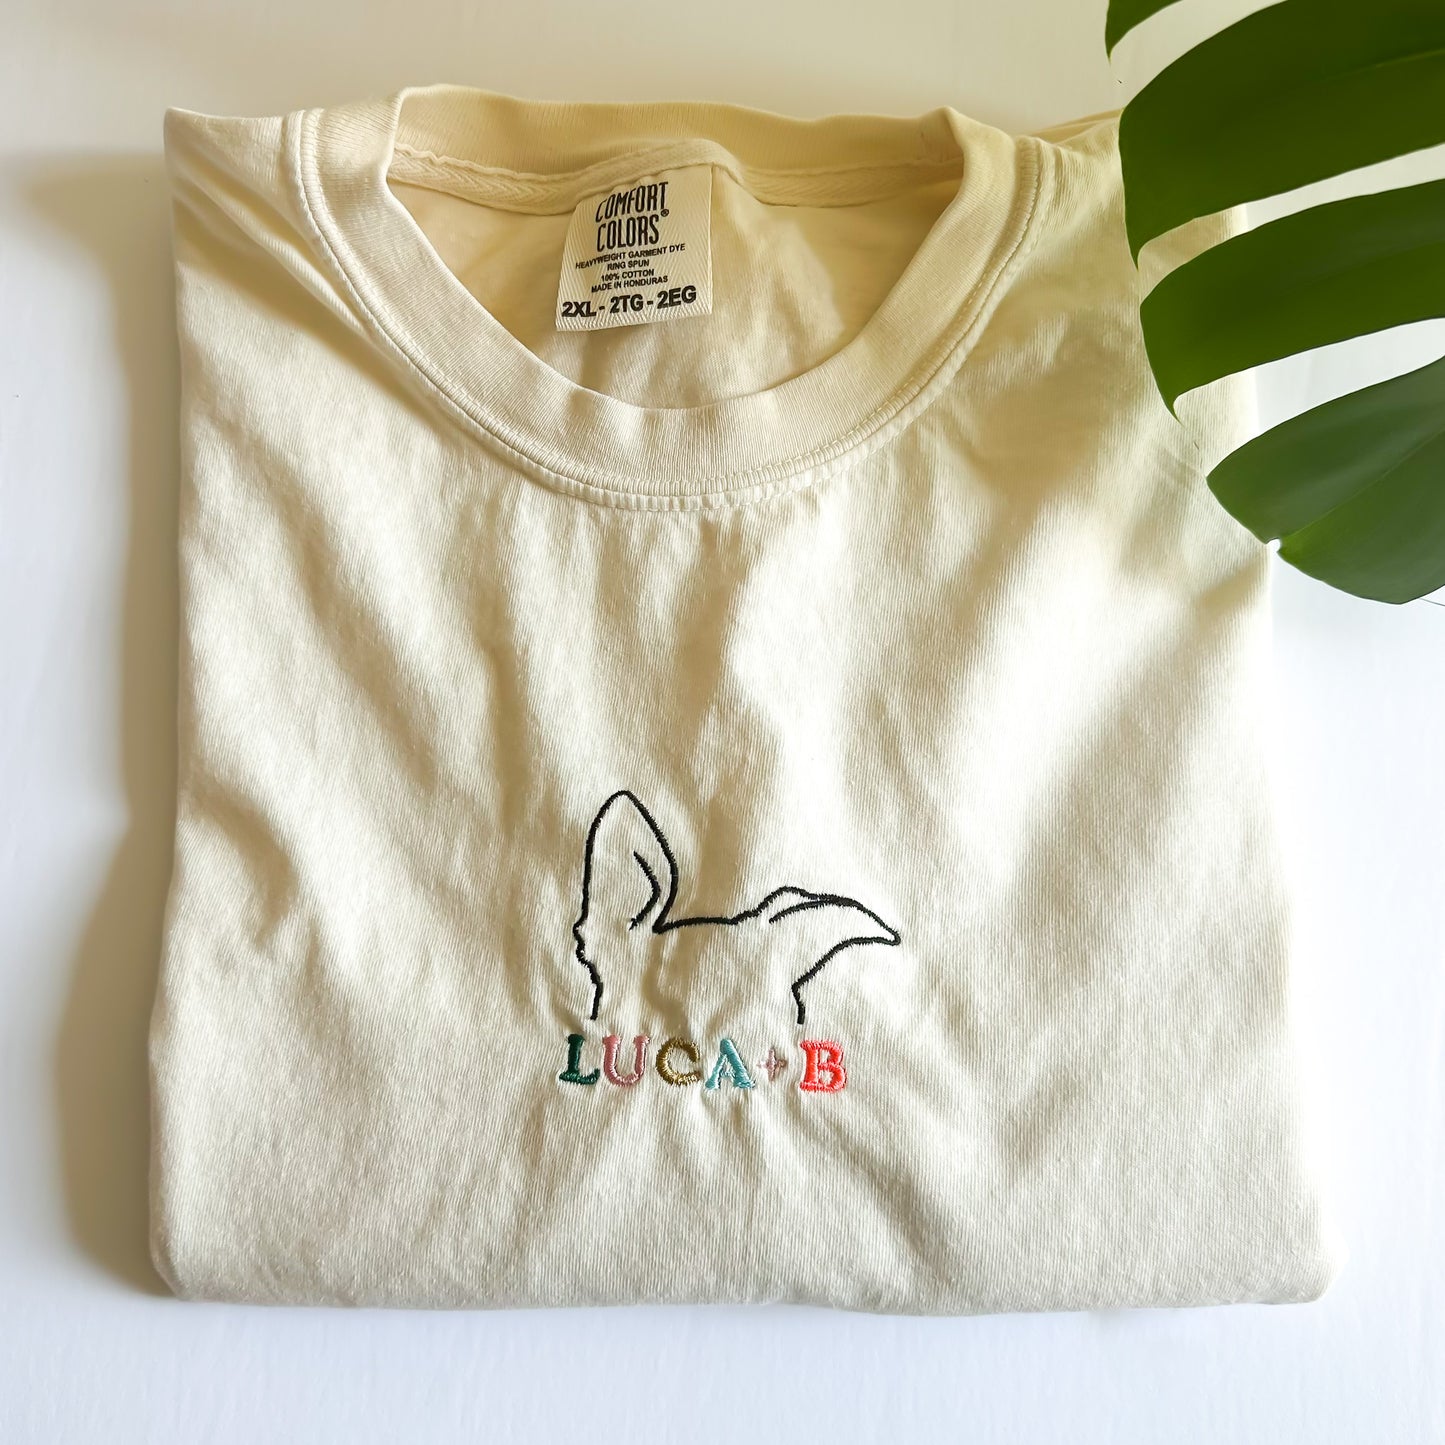 Luca + B Logo Embroidered Tee Shirt